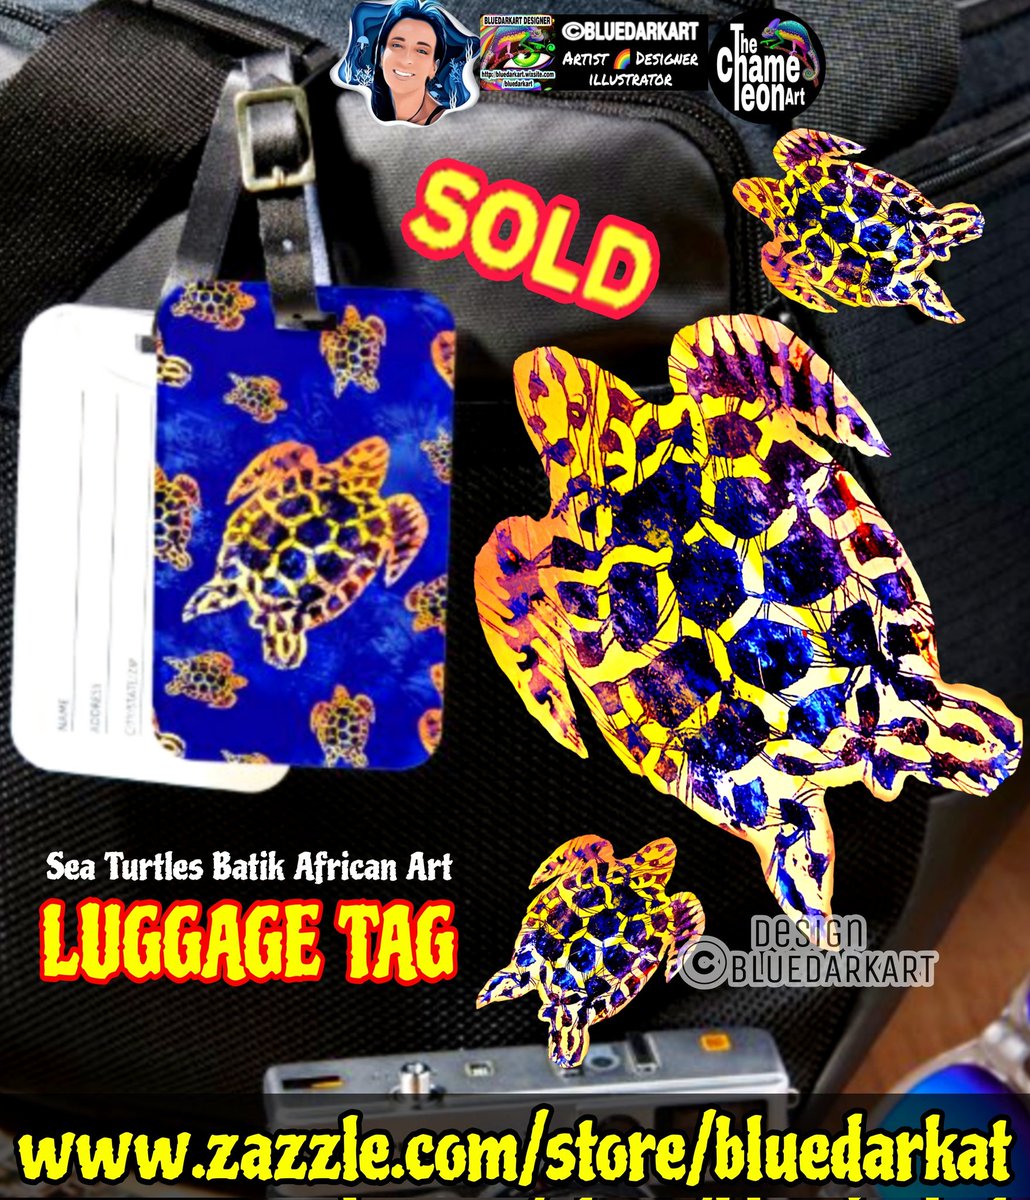 SOLD 🐢 #Sea #Turtles #Batik #African #Art #luggage #tag 🐢 #design © #BluedarkArt #TheChameleonArt 👉 zazzle.com/sea_turtles_ba…
▪︎
🔥 #save up to 50% 🎁 on #shop 👉 zazzle.com/store/bluedark…
▪︎
#seaturtles #gifts #birthdaygifts #christmasgifts #gadgets #trends #luggagetag